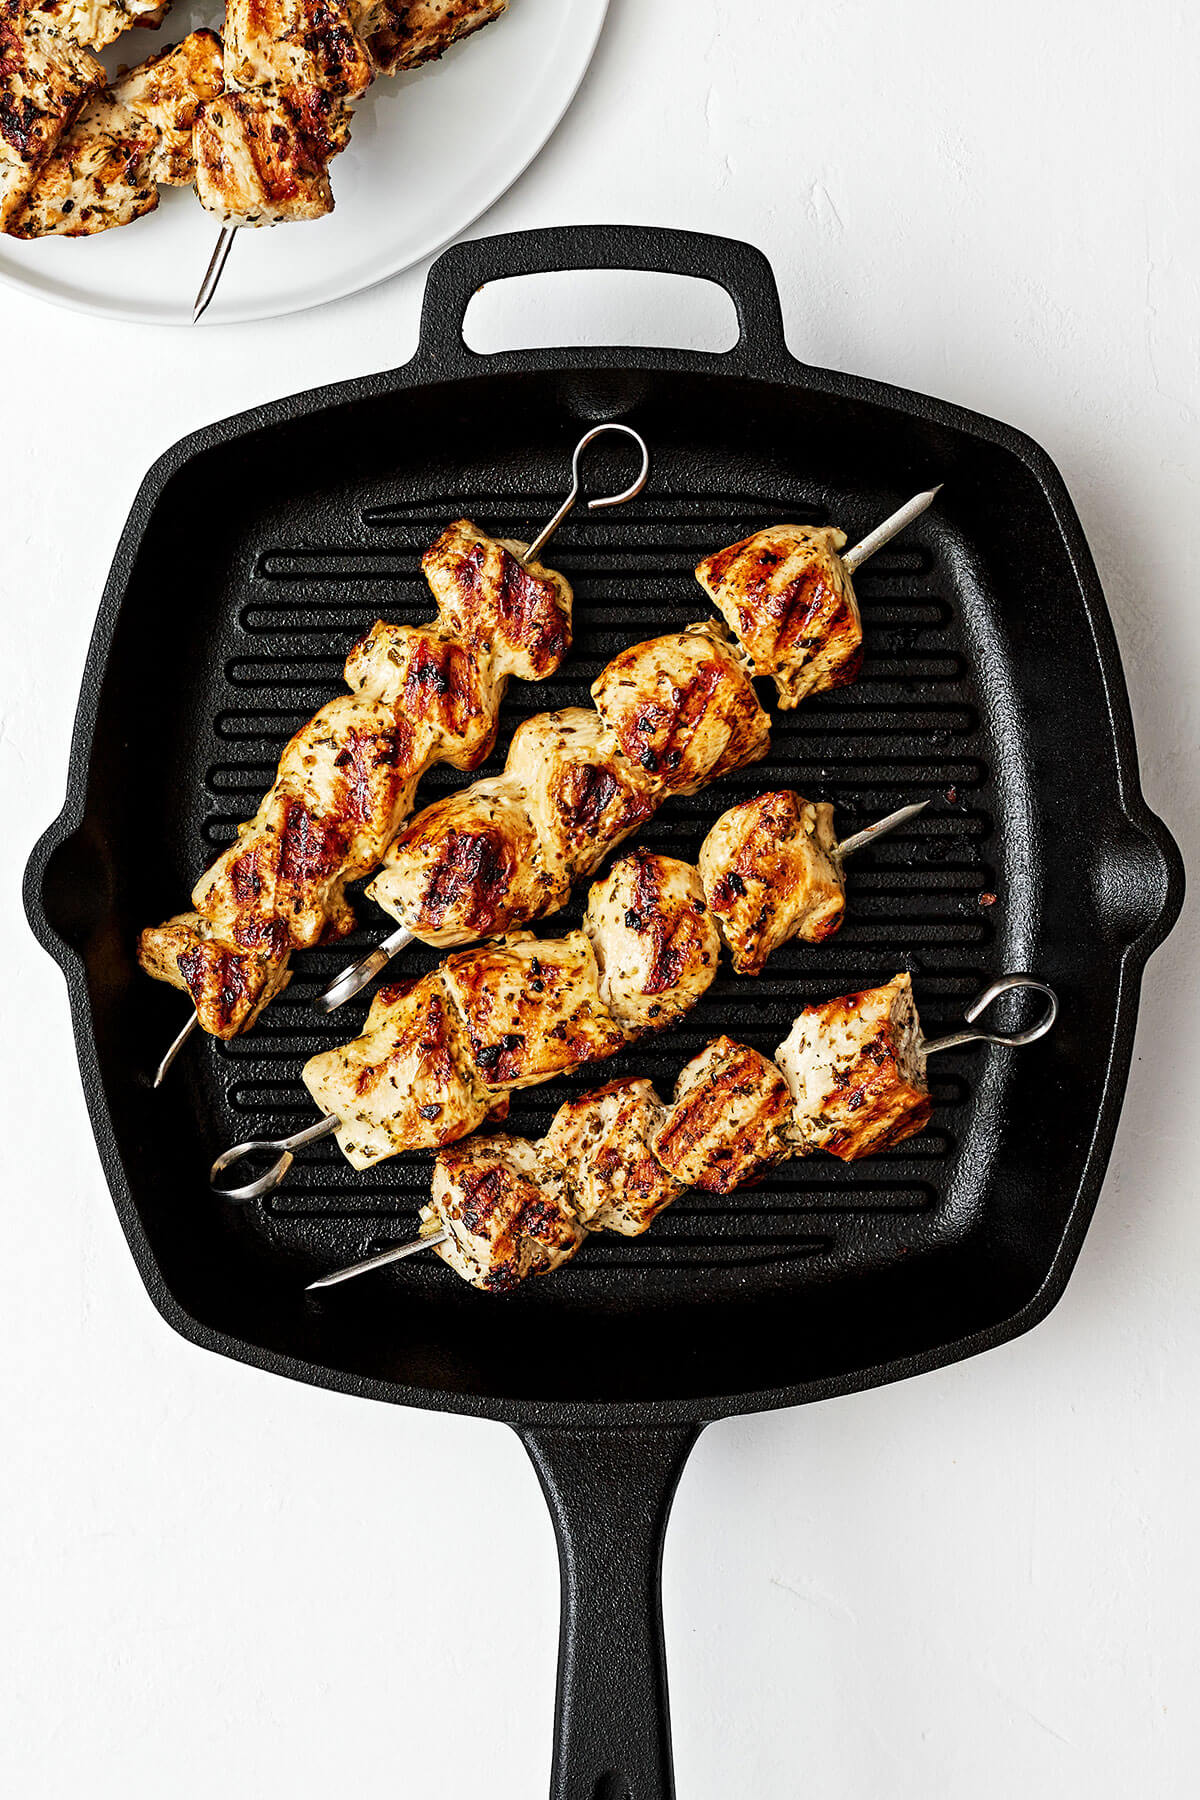 Grilling chicken souvlaki on a grill pan